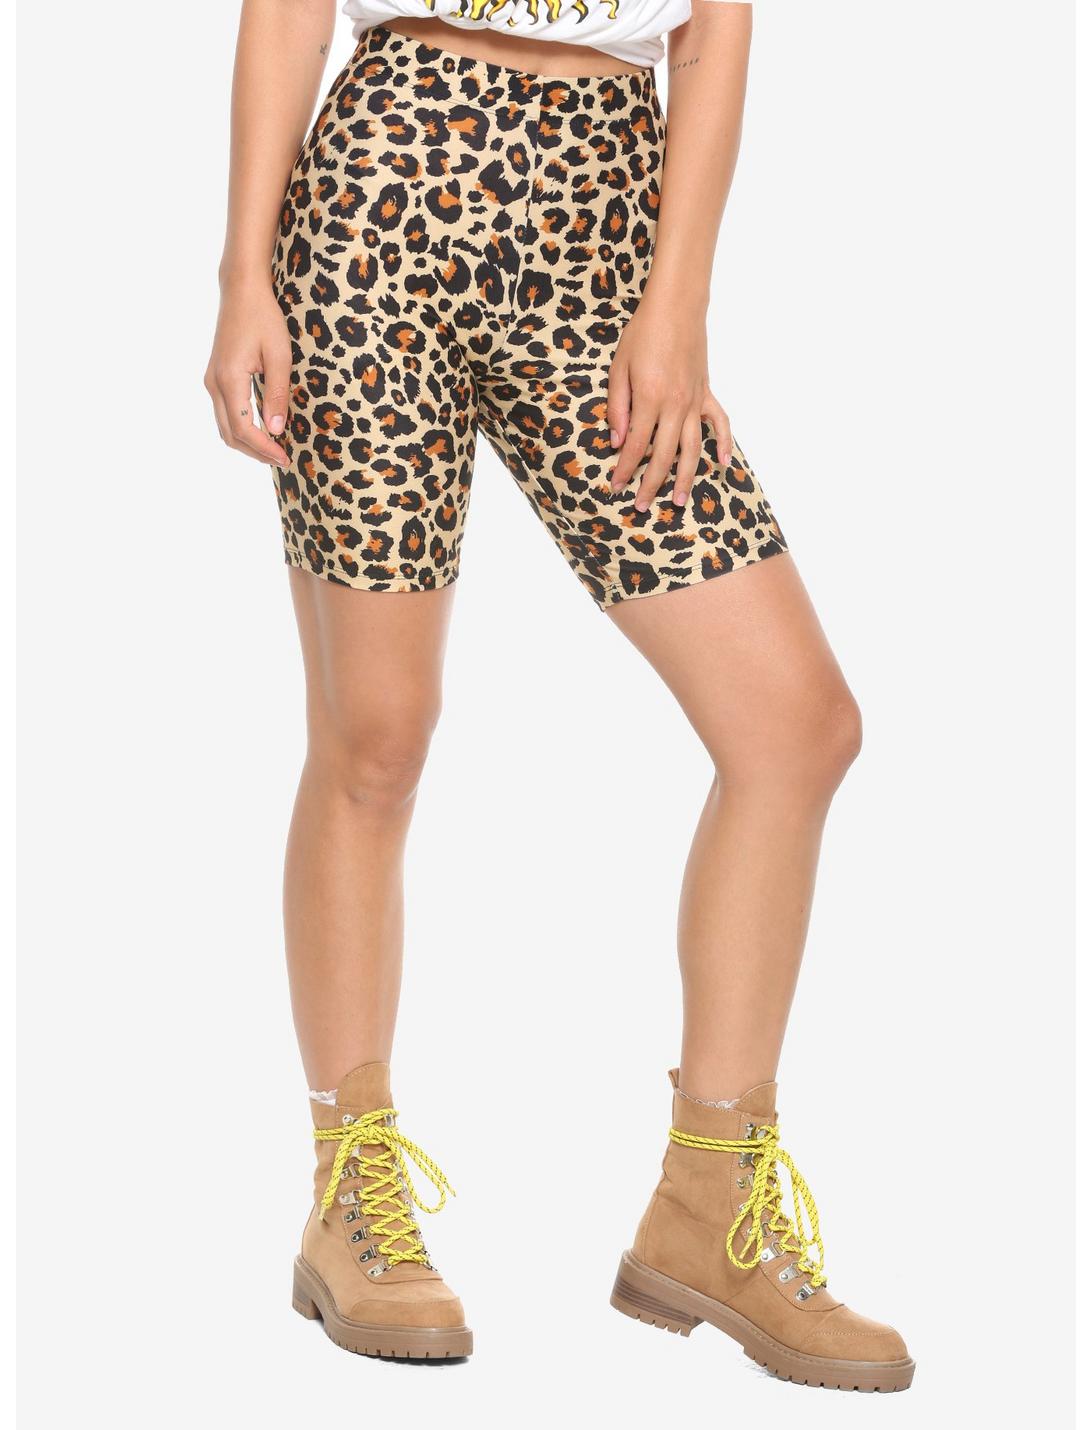 Leopard Girls Bike Shorts, LEOPARD, hi-res